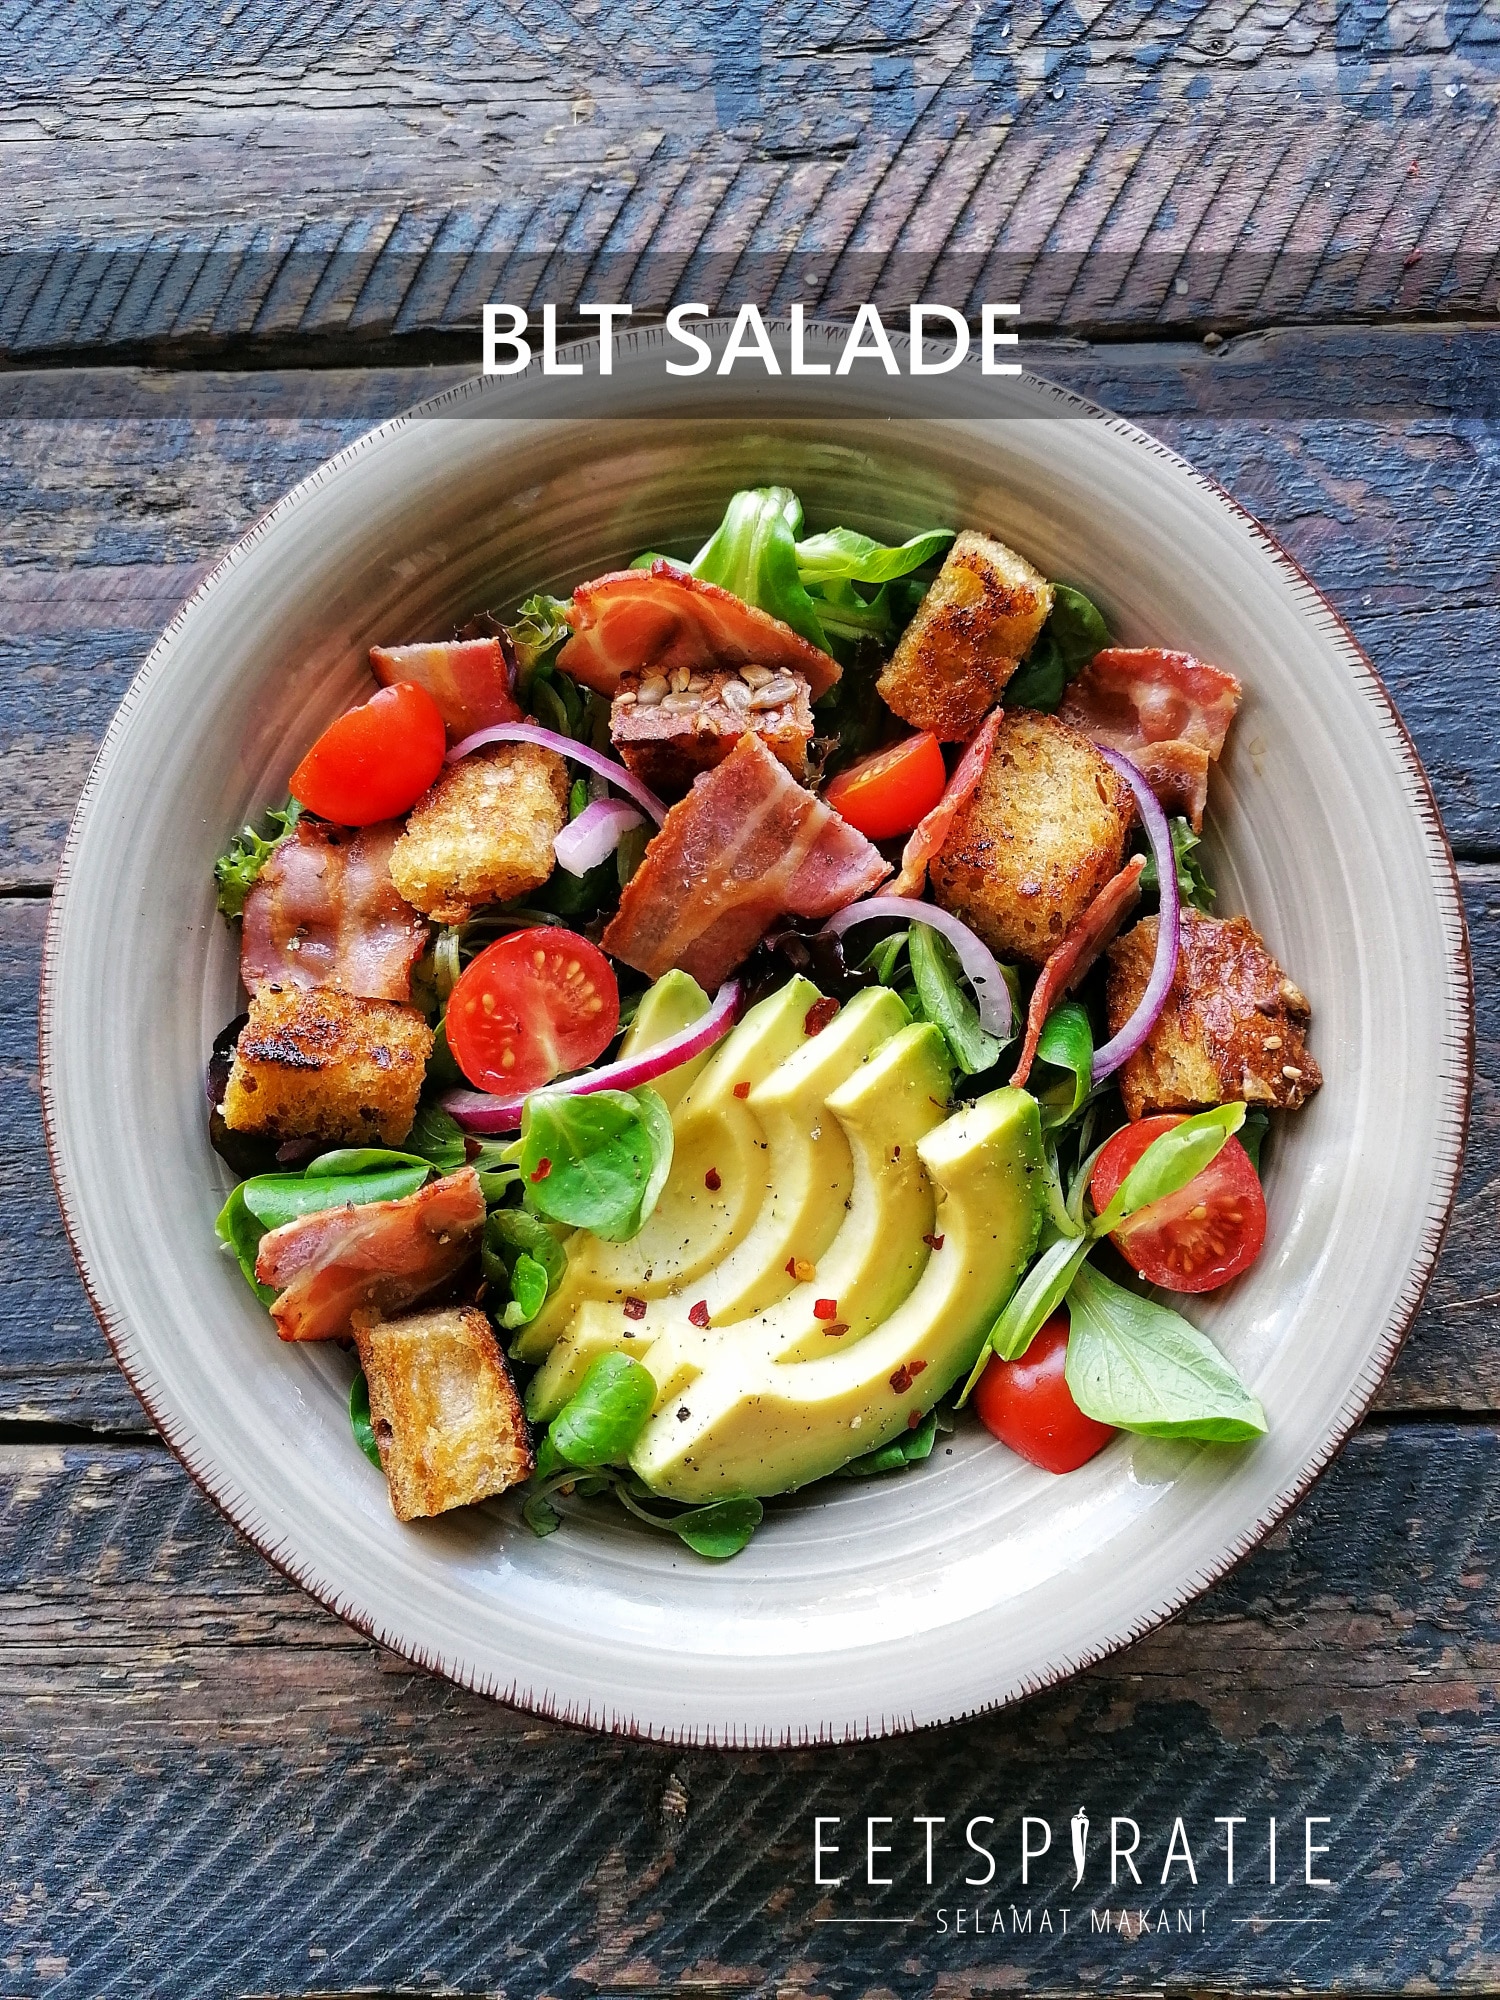 BLT salade (bacon lettuce tomato)